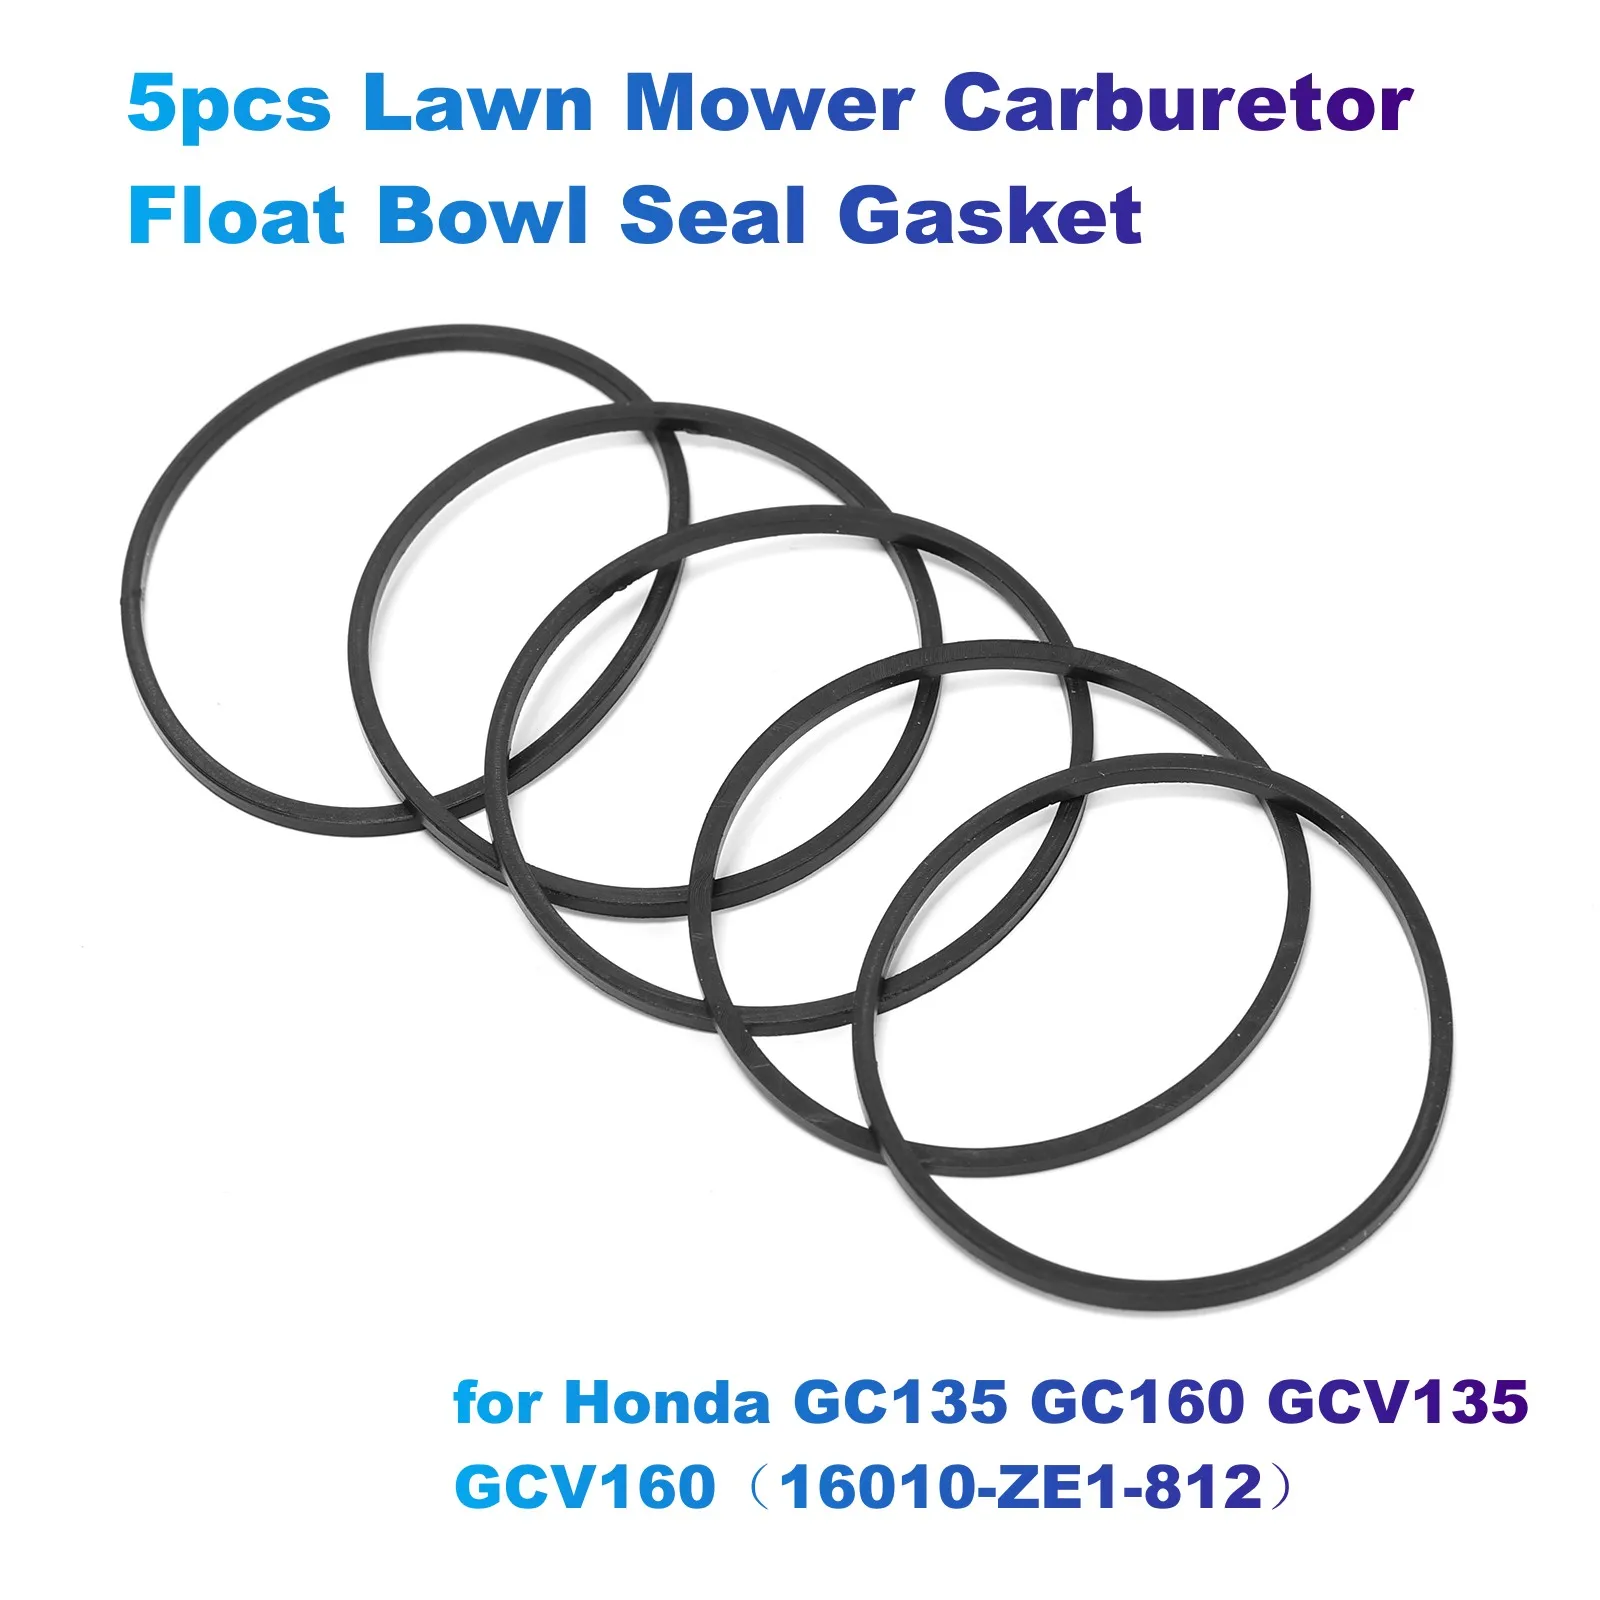 5pcs Lawn Mower Carburetor Float Bowl Seal Gasket for Honda GC135 GC160 GCV135 GCV160（16010-ZE1-812） carburetor kit for honda gcv135 gcv160 gc135 160 hrb216 hrs216 hrr216 lawn mower part replacement carburetor kit garden supplies